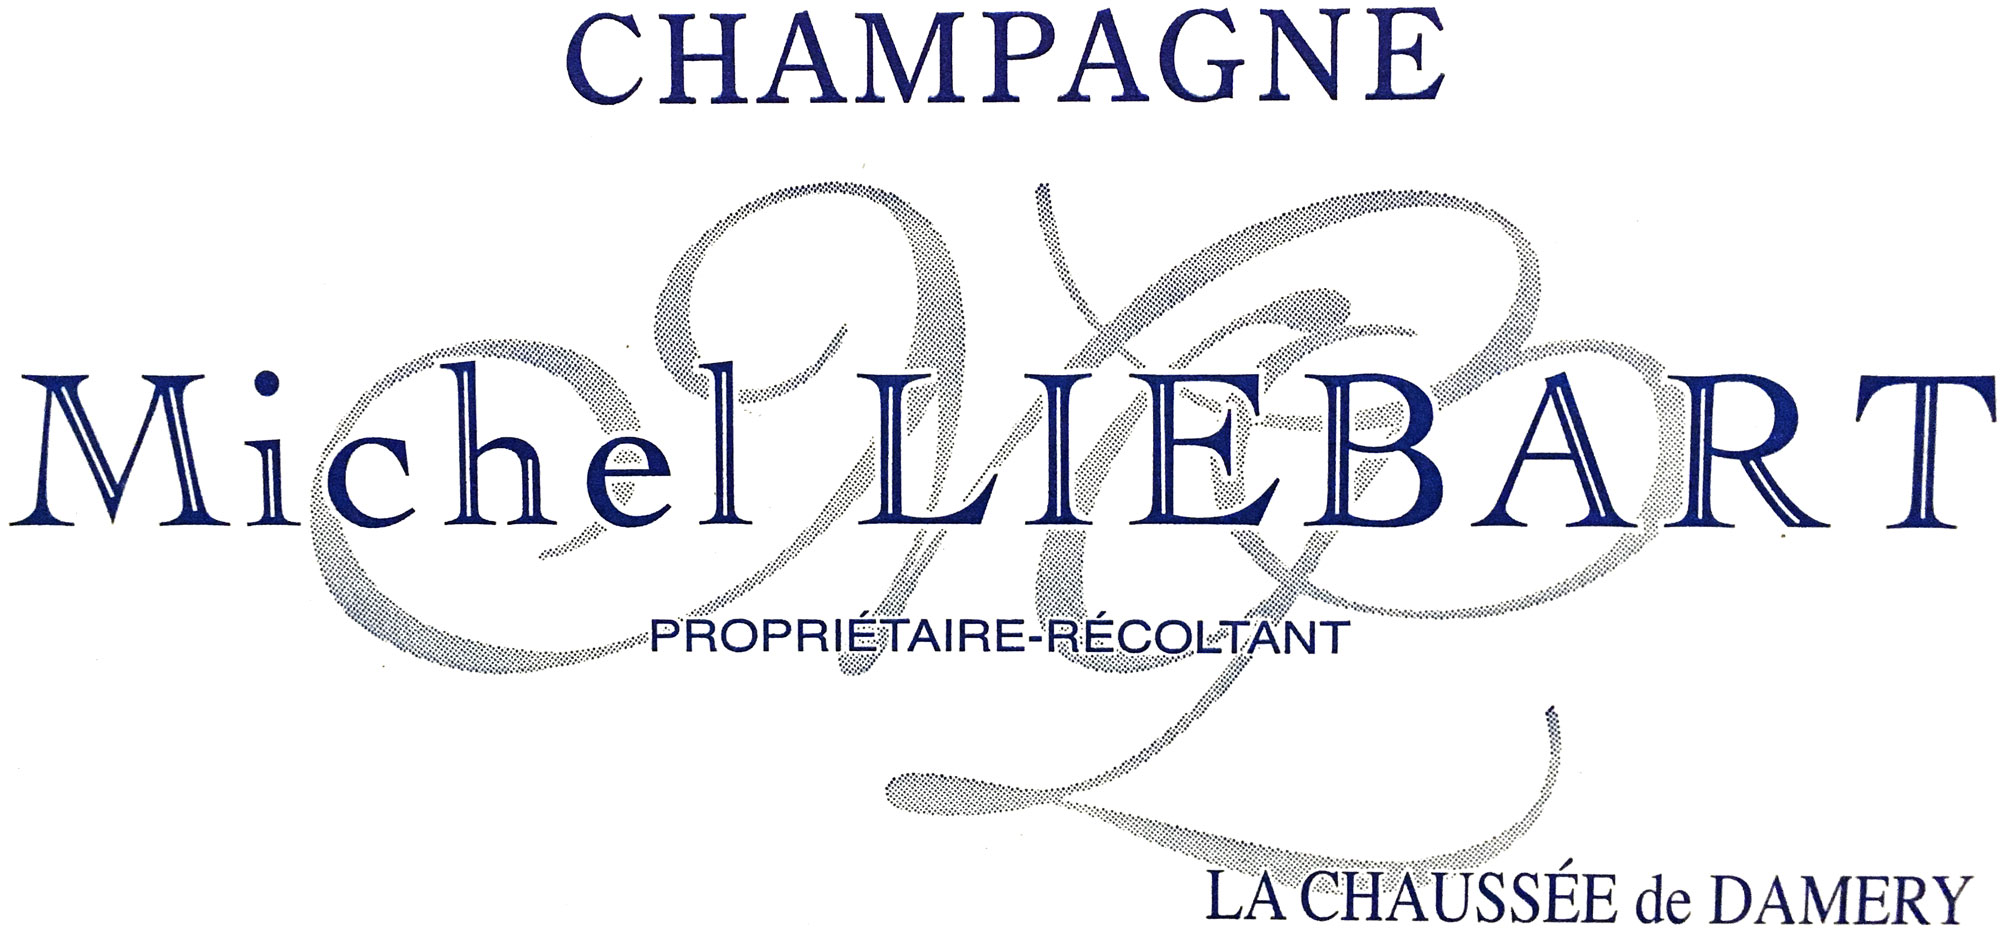 Champagne Michel Liébart